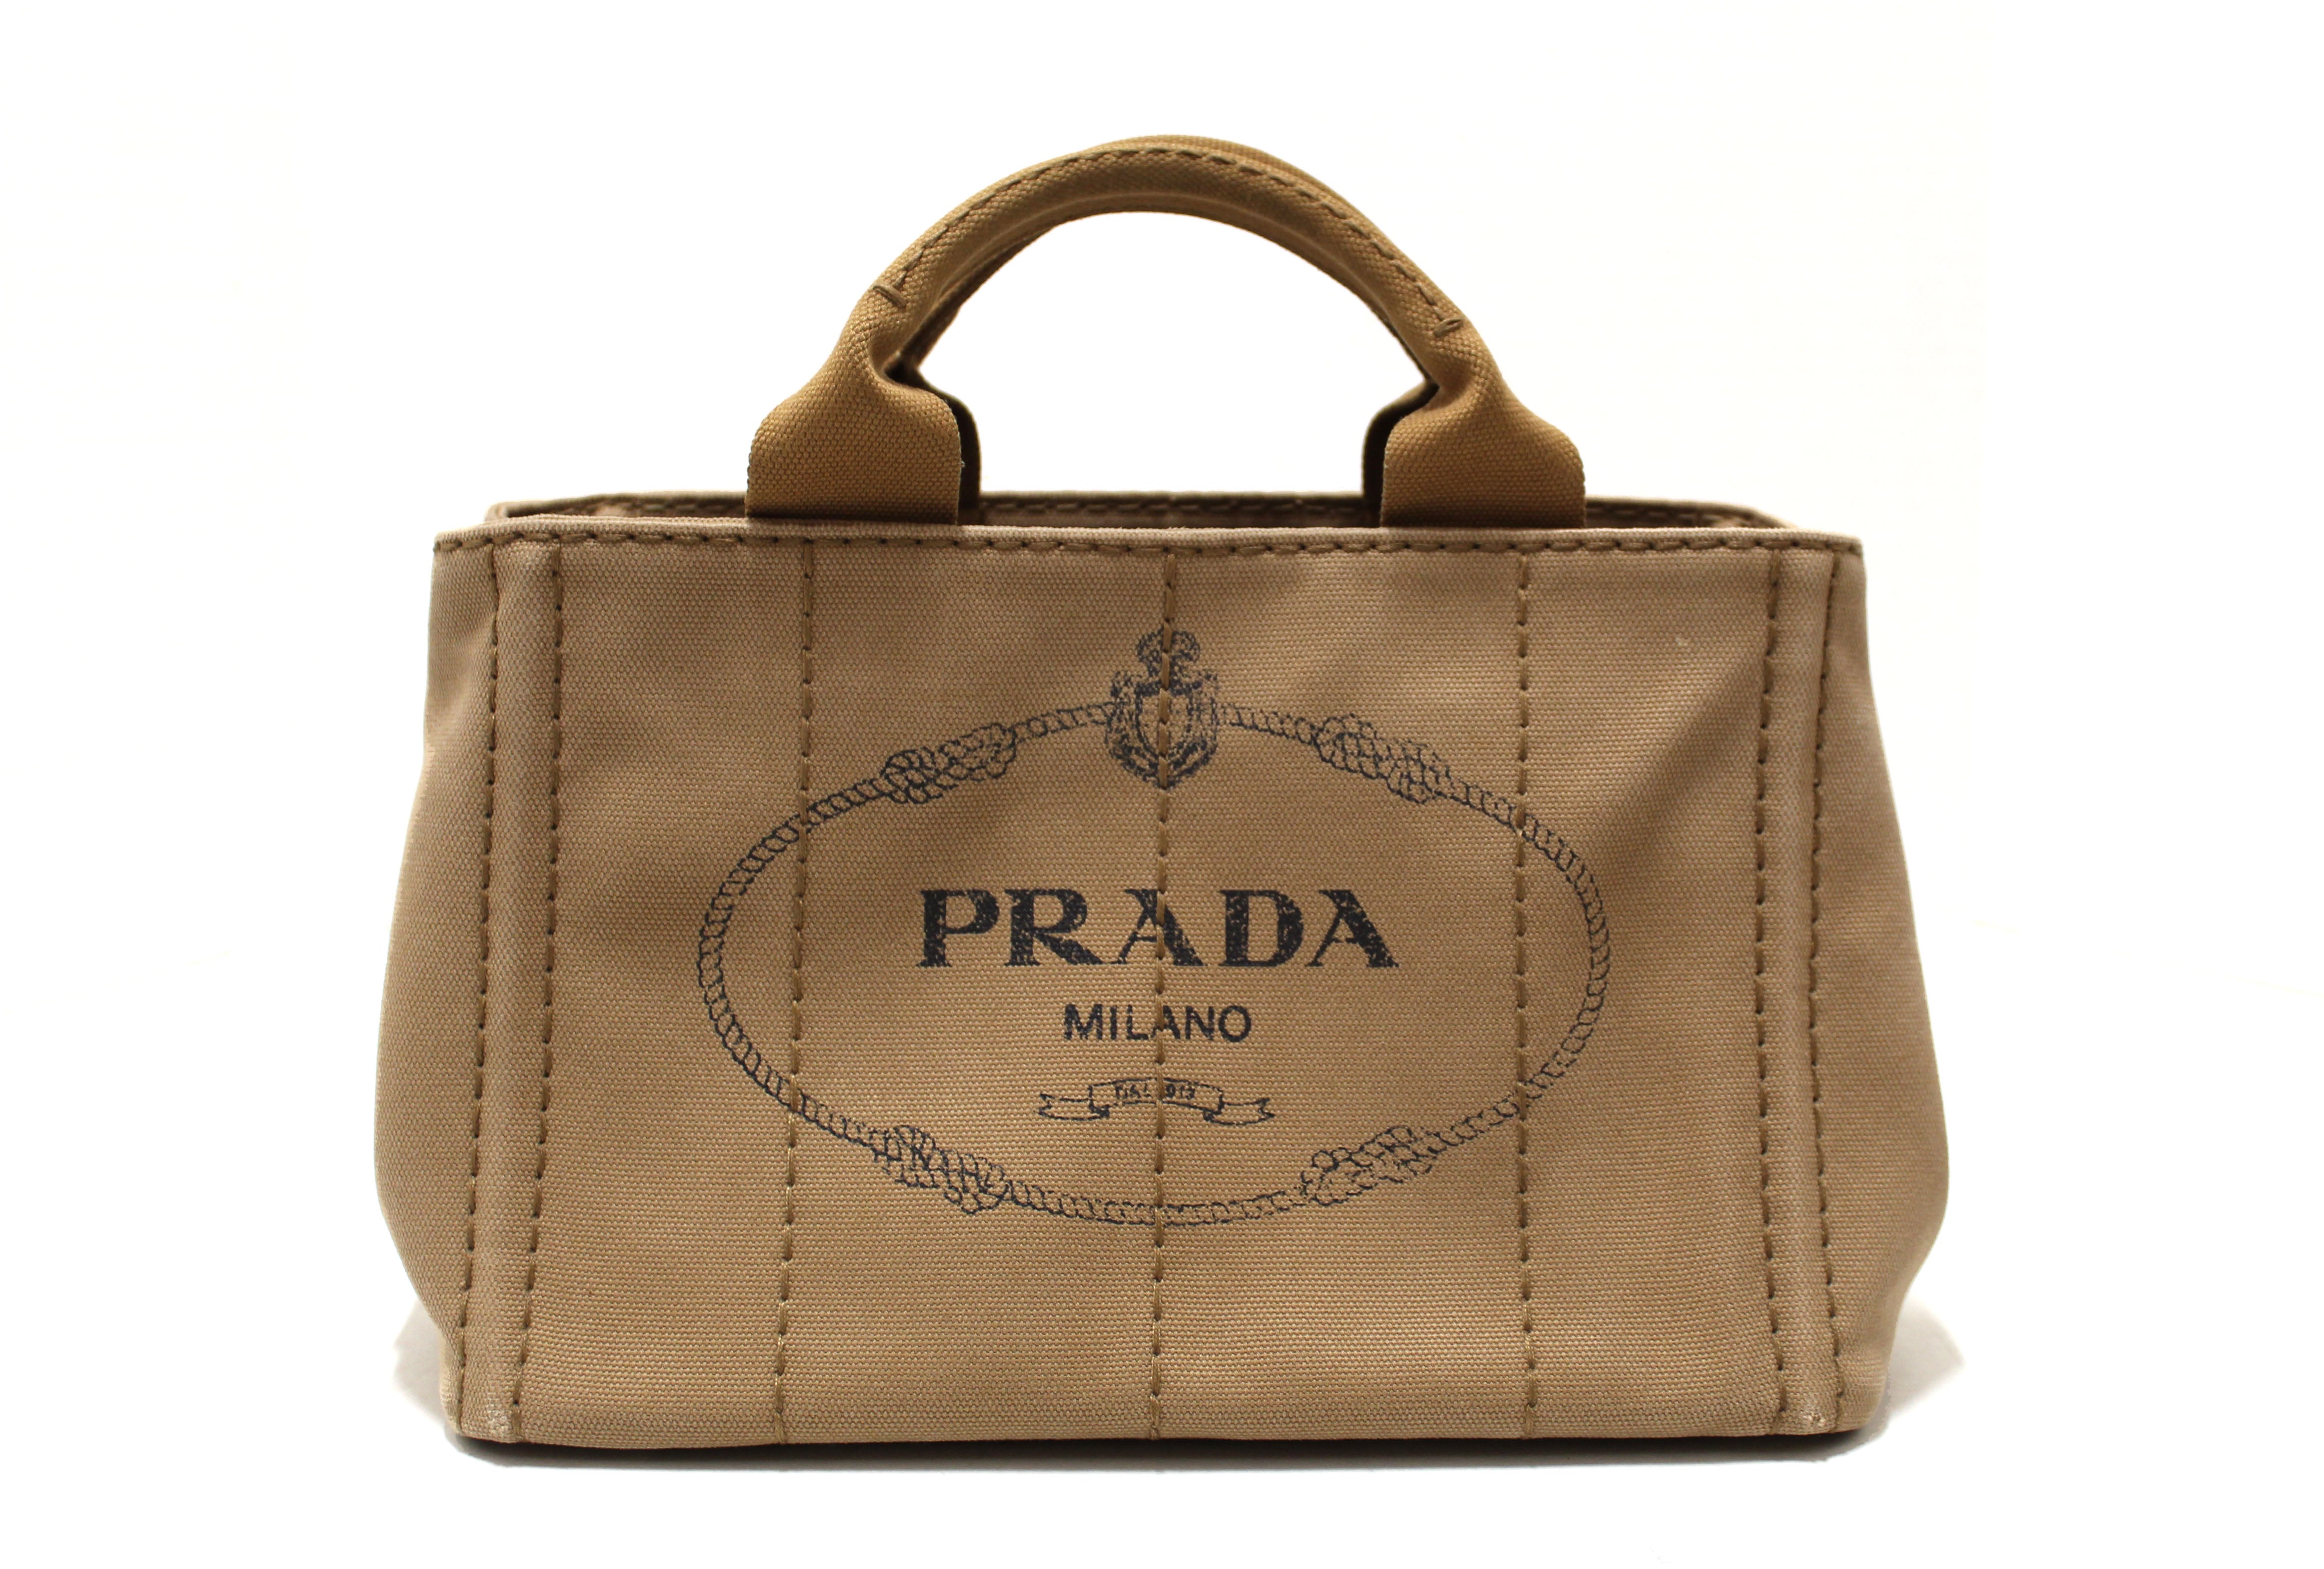 Prada Beige/Brown Canapa Canvas and Leather Tote Prada | The Luxury Closet